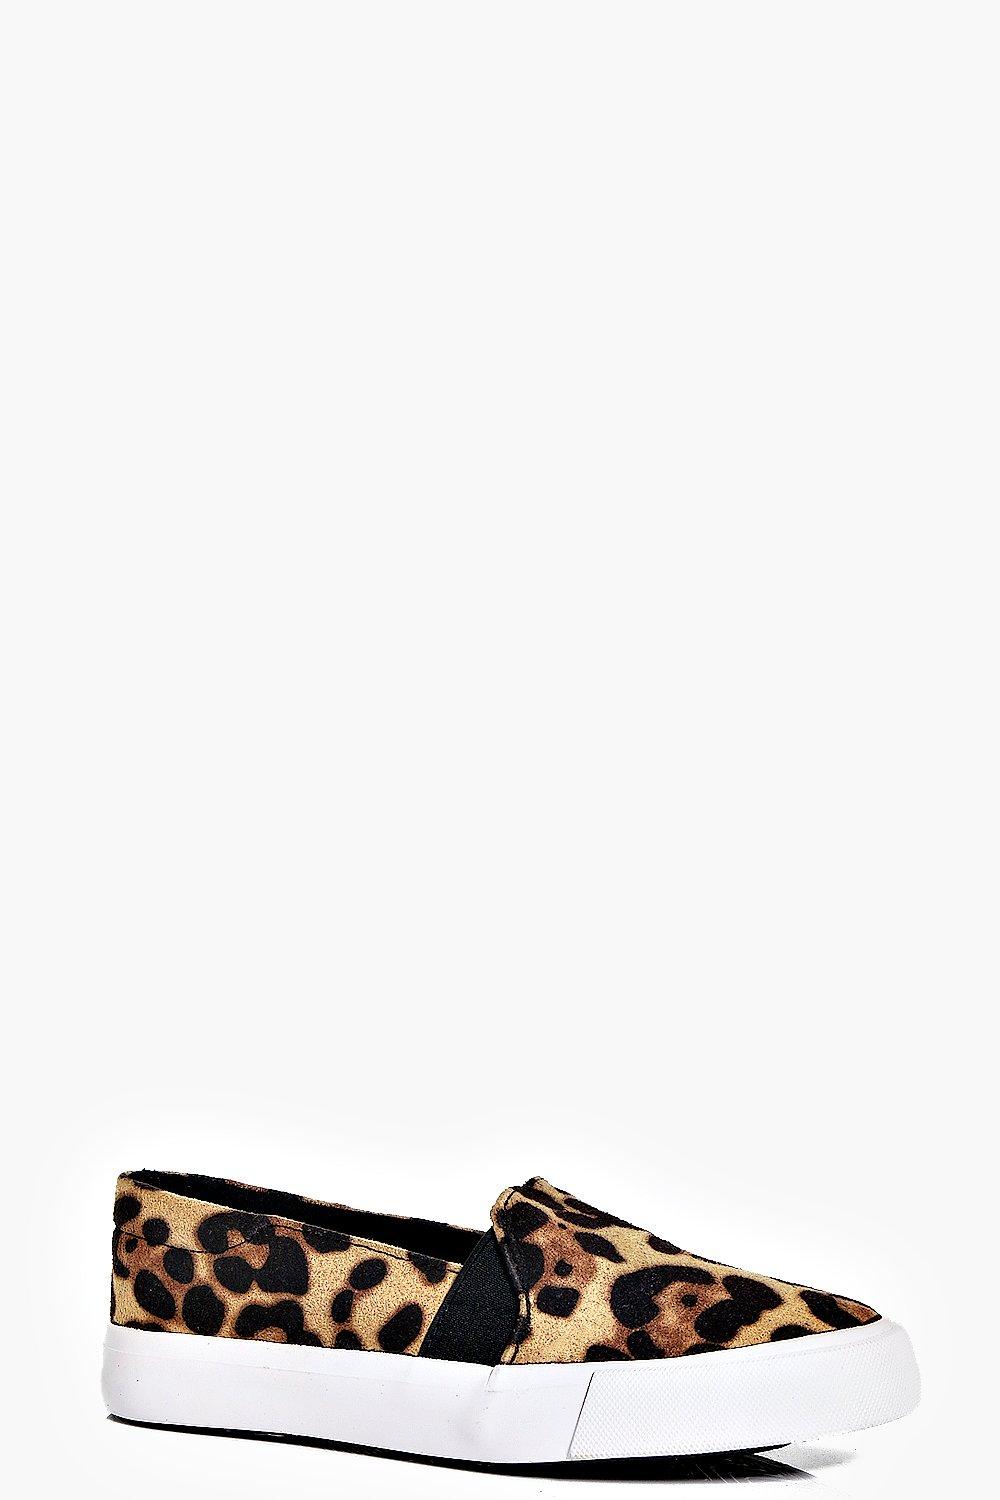 leopard print slip on trainers uk